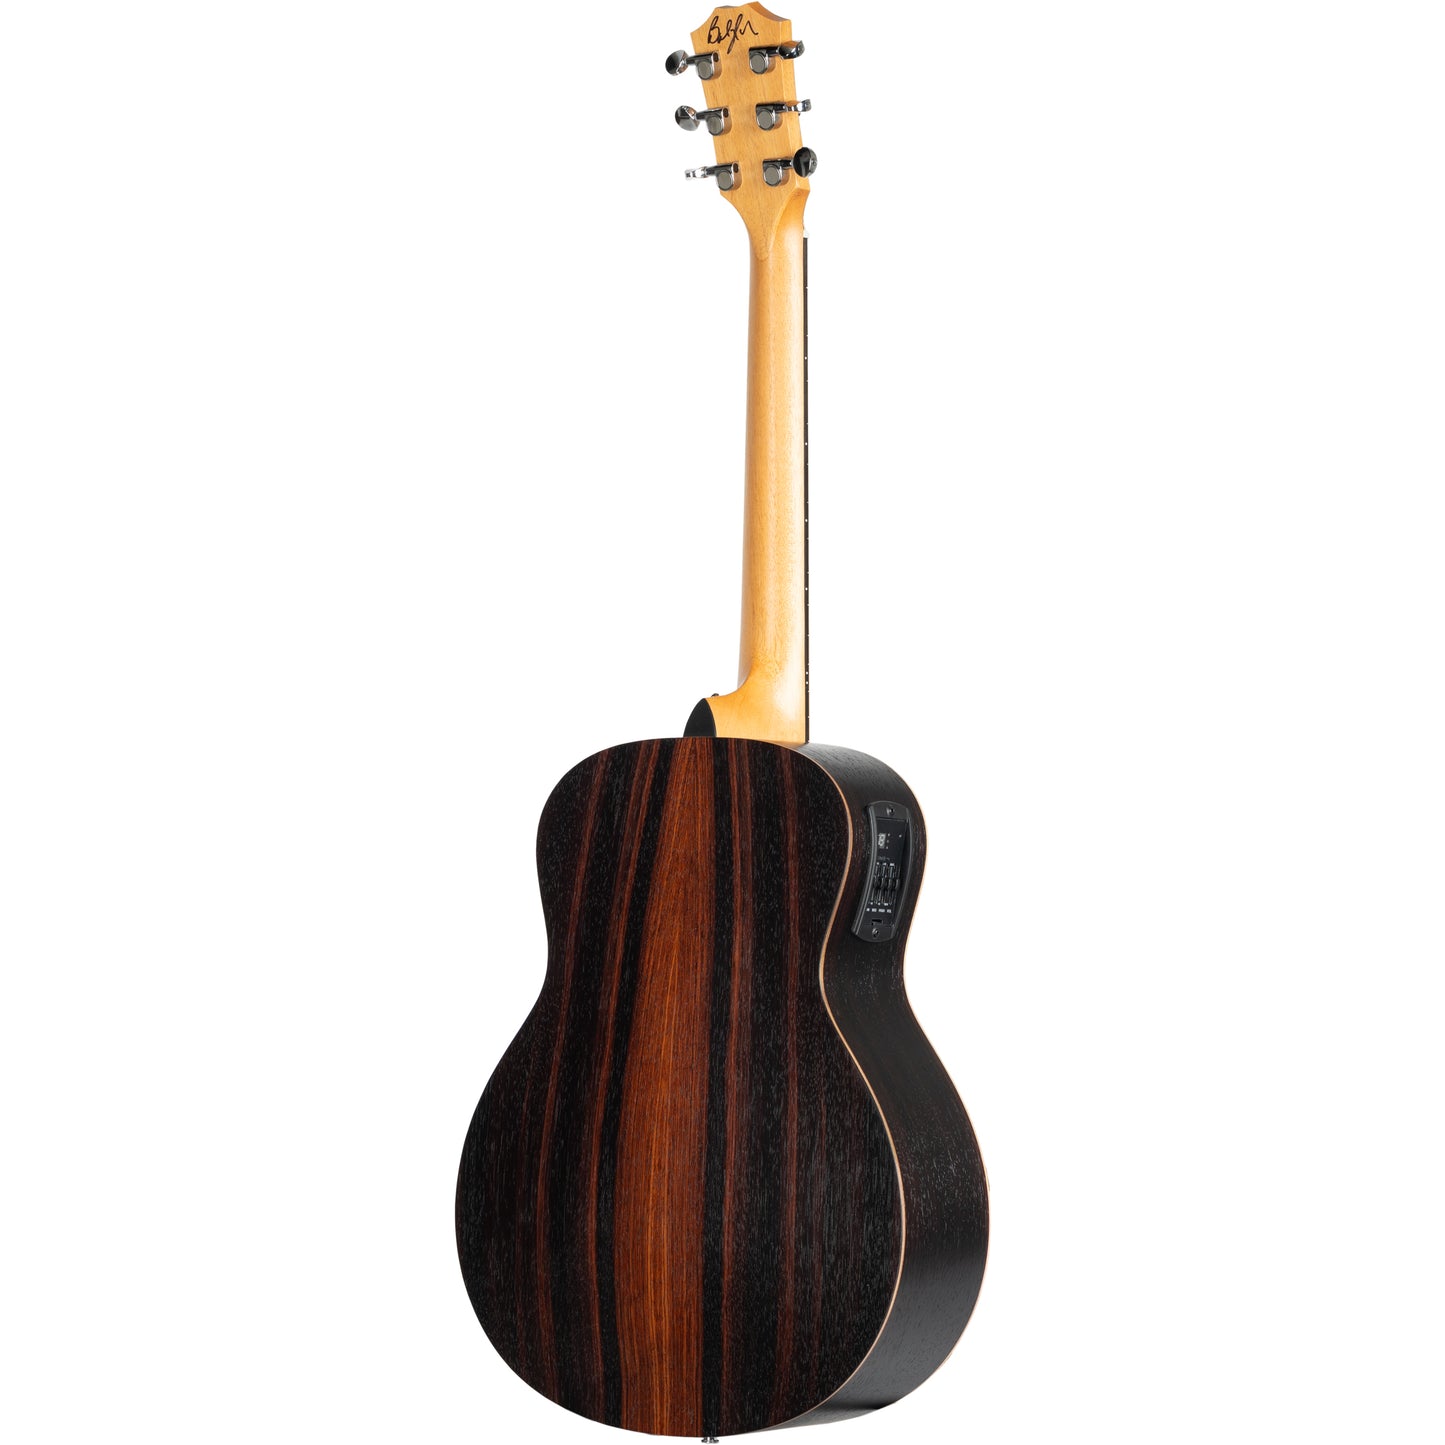 Taylor GS Mini-e Rosewood Natural Acoustic Electric Guitar